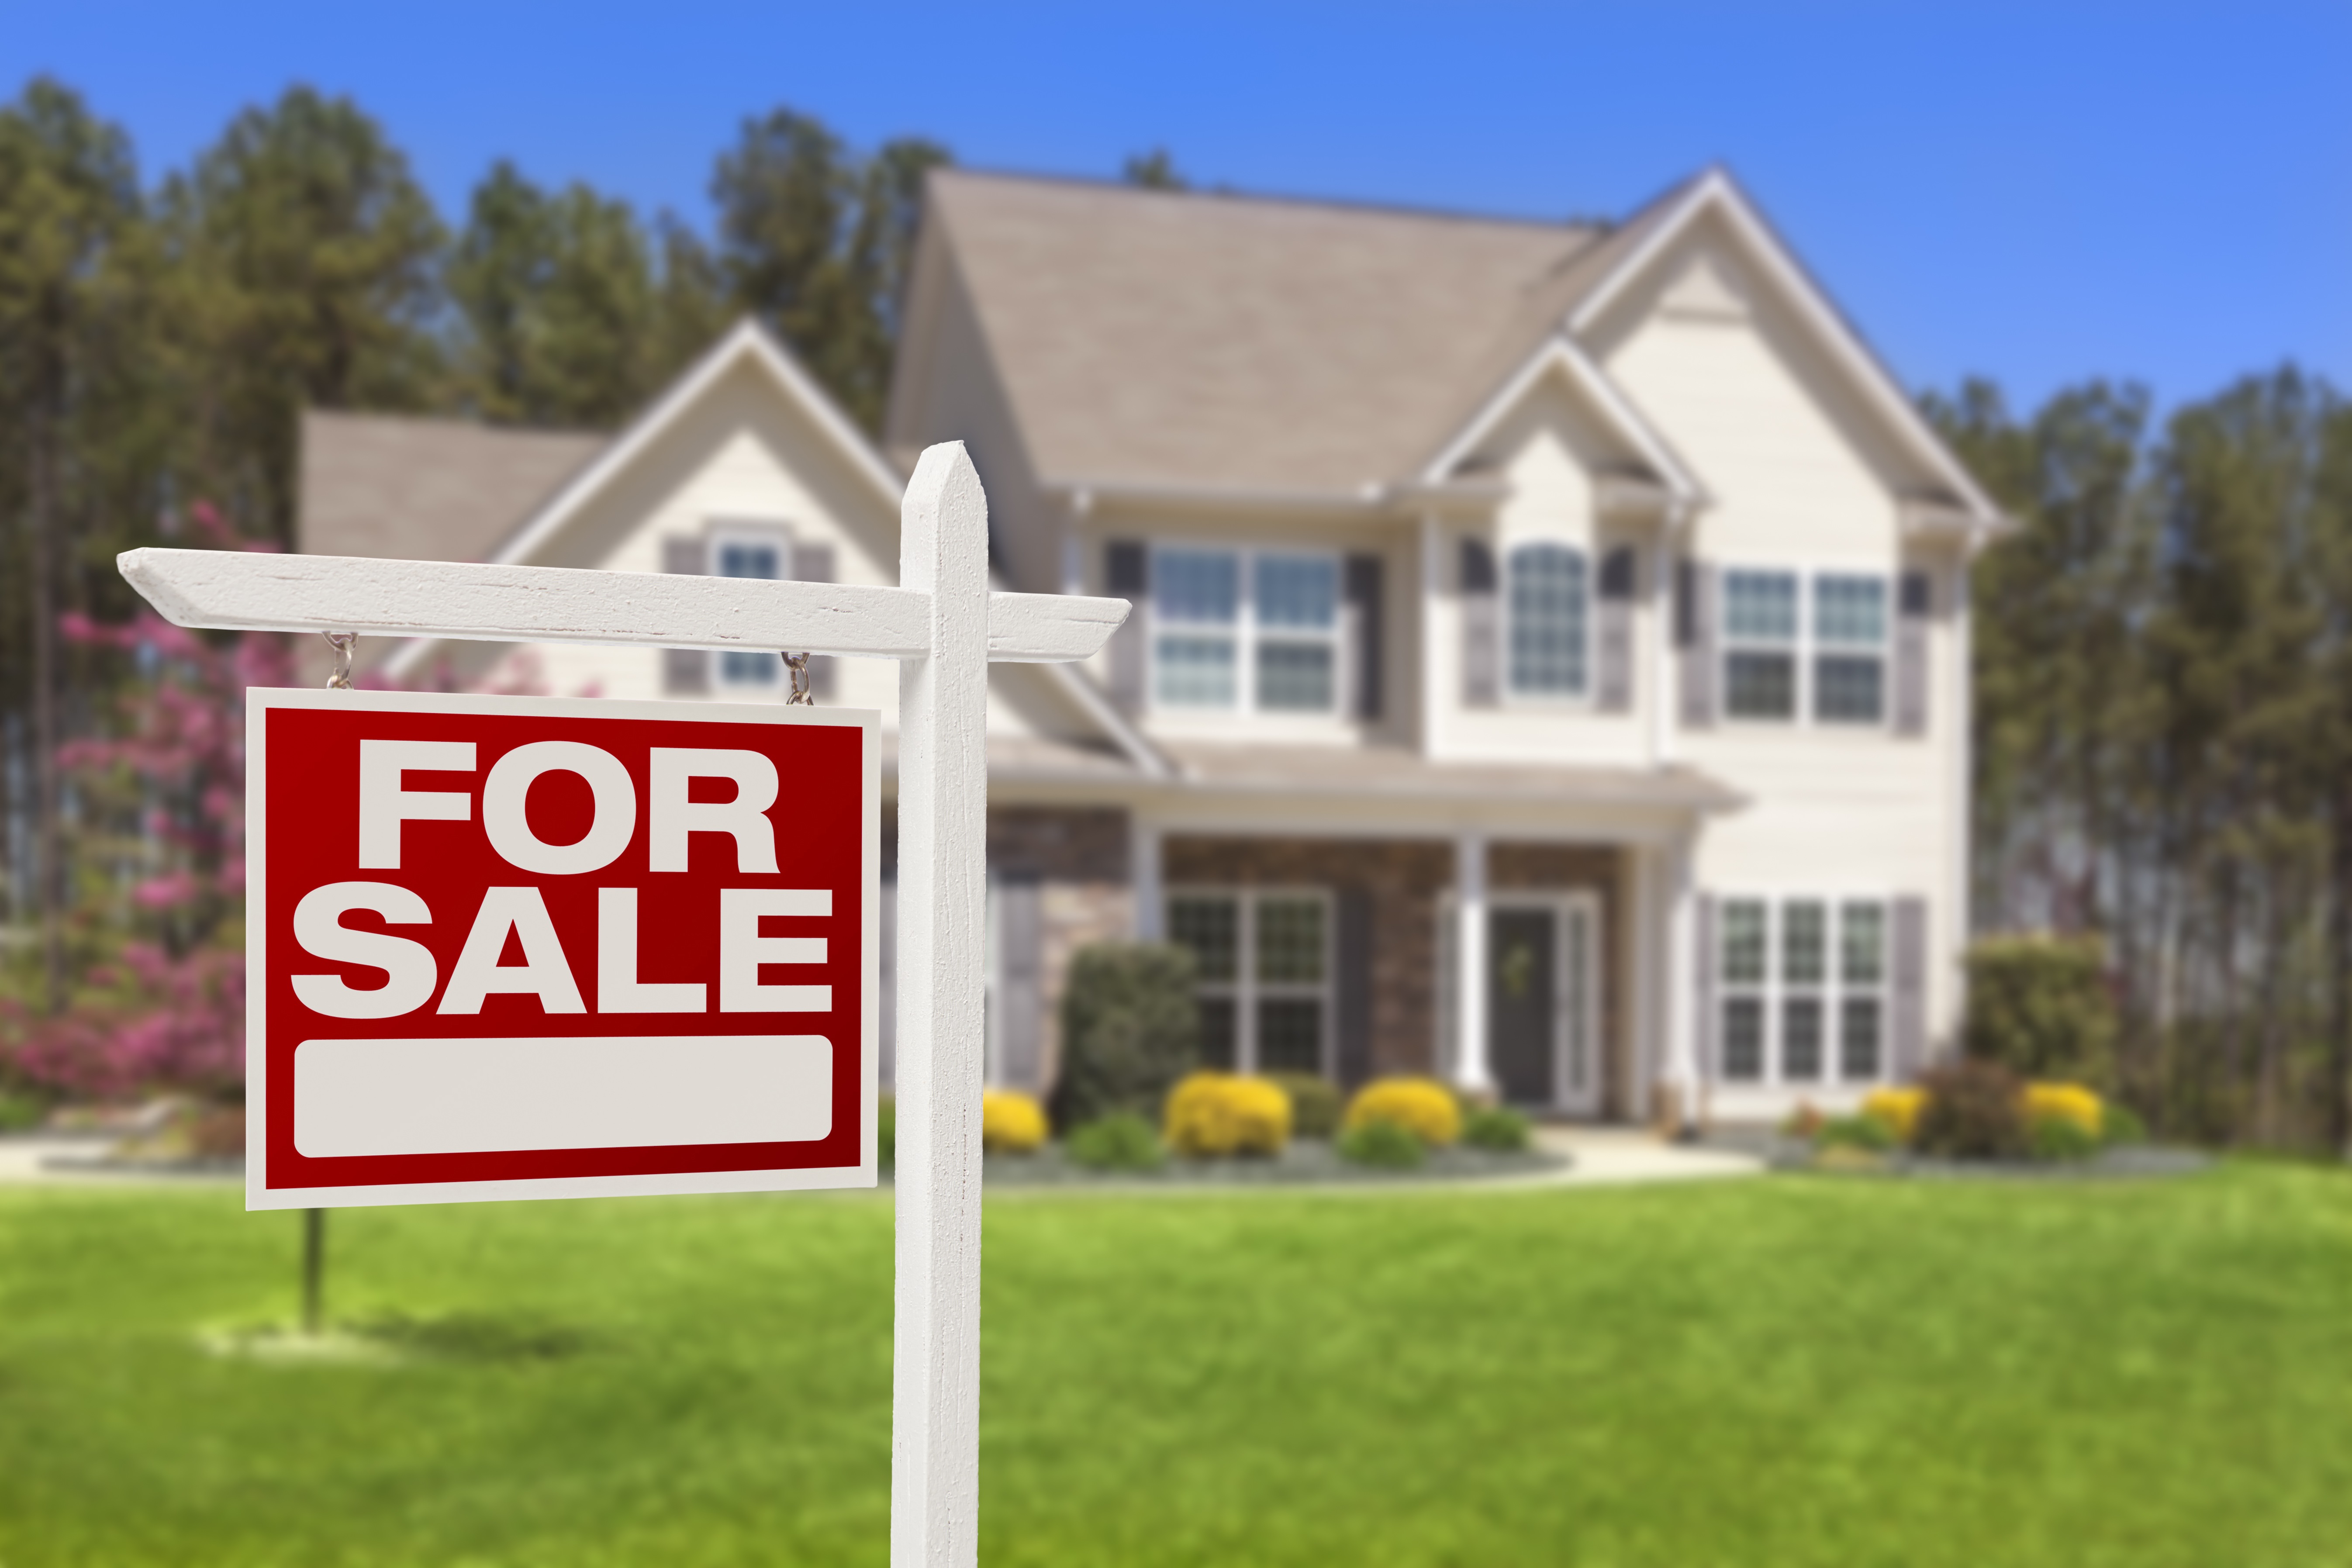 Home real estate. House for sale. Sale недвижимость. House for sale строительная фирма. Real Estate sale.